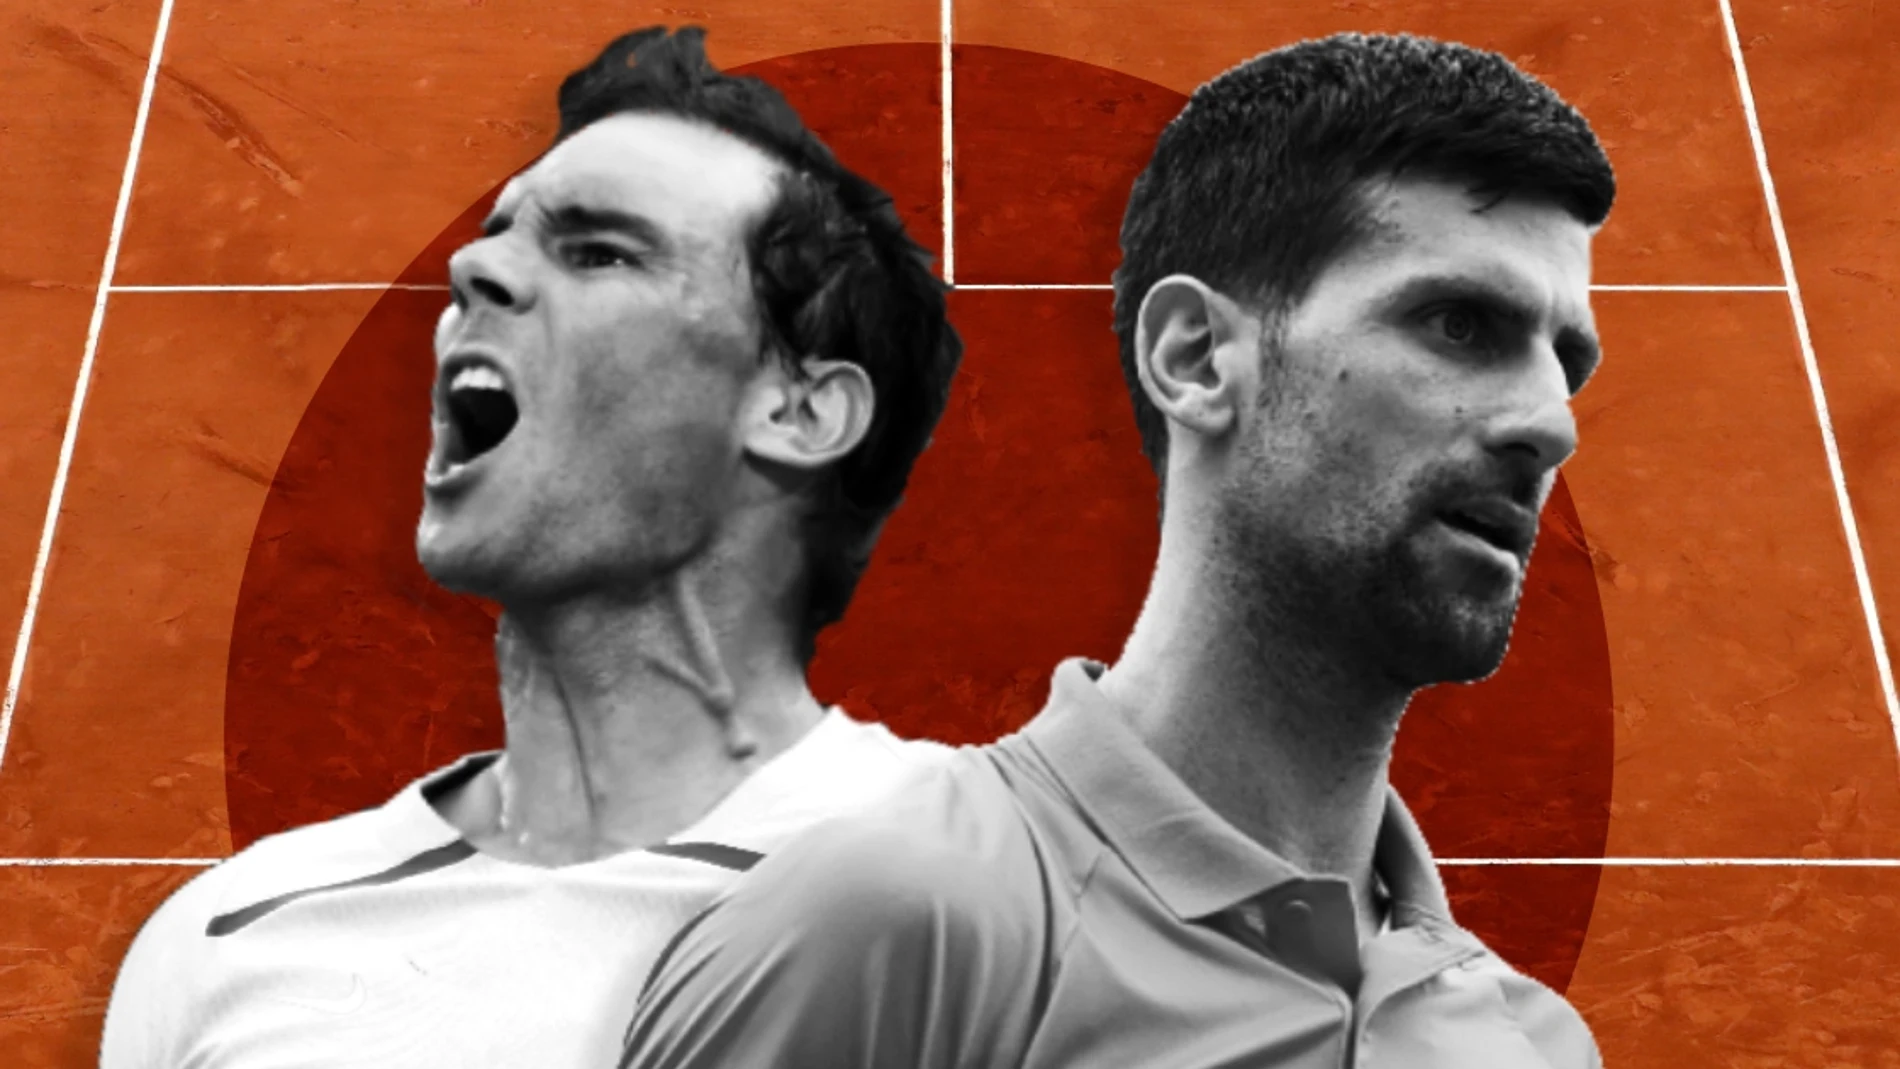 Rafael Nadal vs Novak Djokovic, resultado en directo